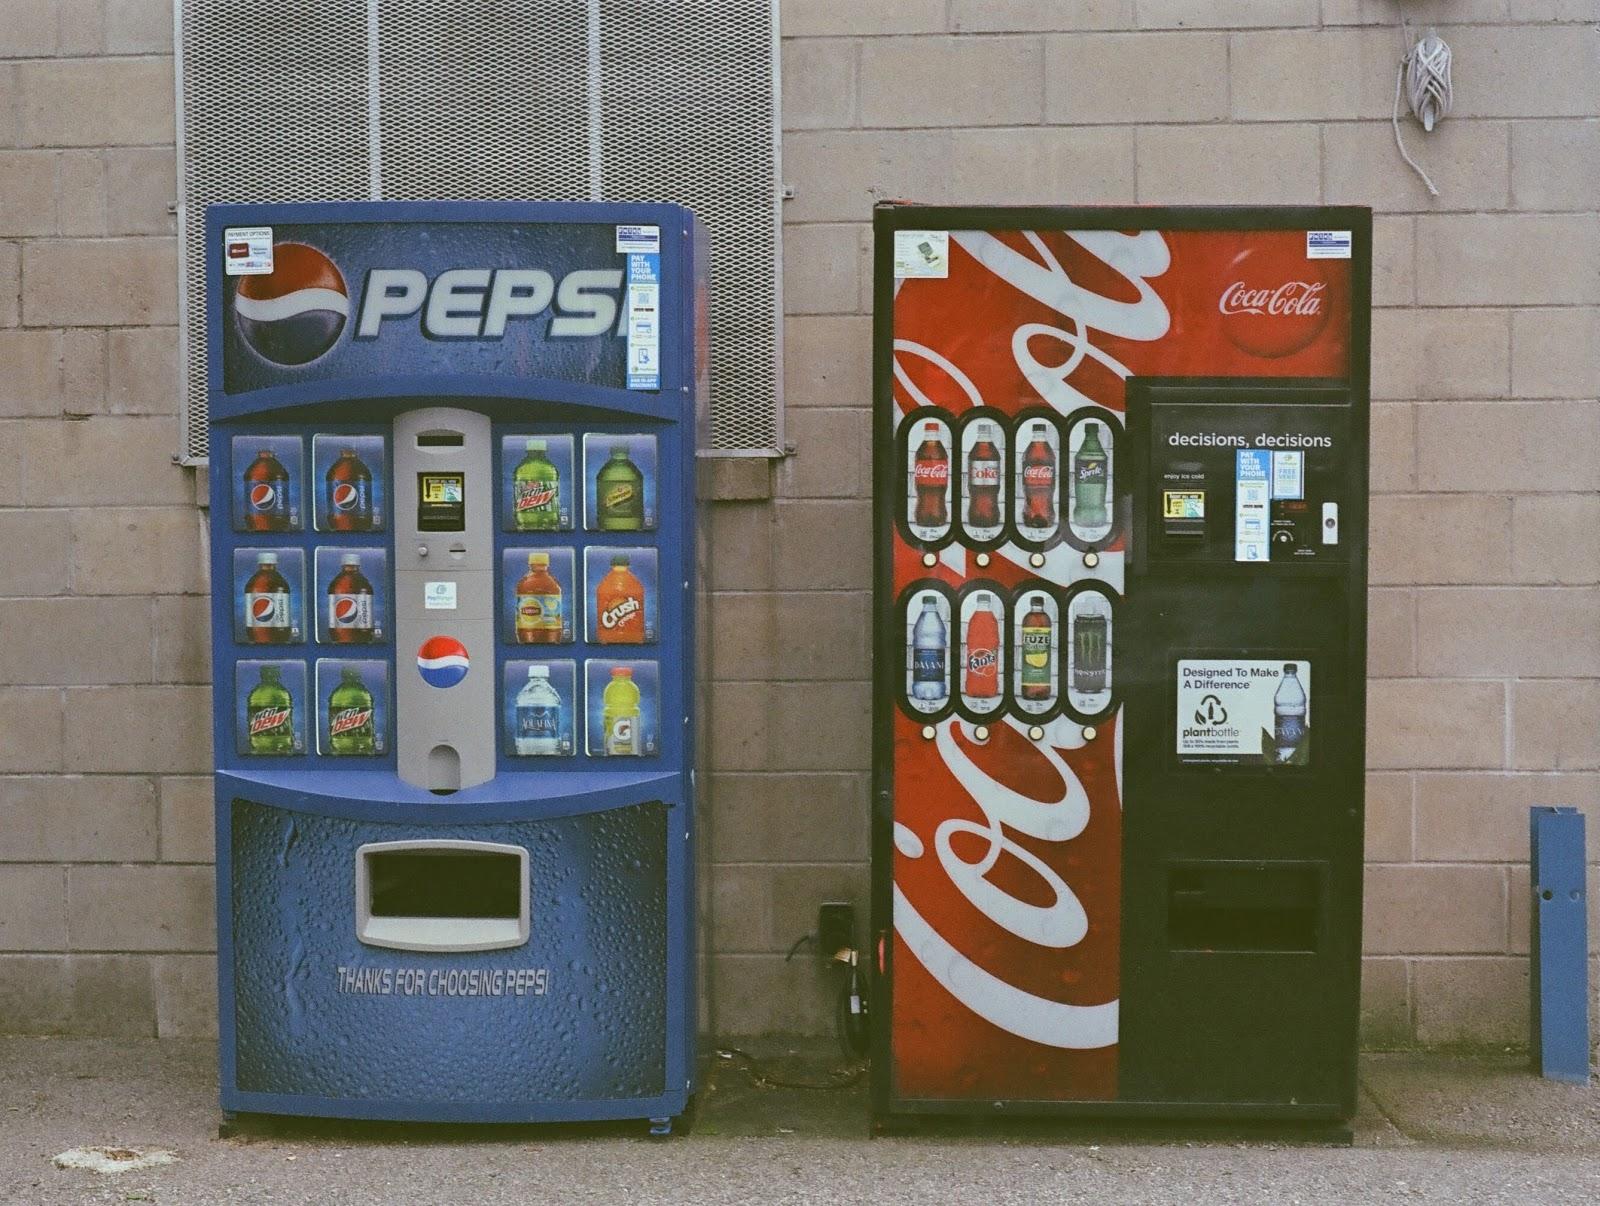 coke vending machine next to a pepsi vending machine